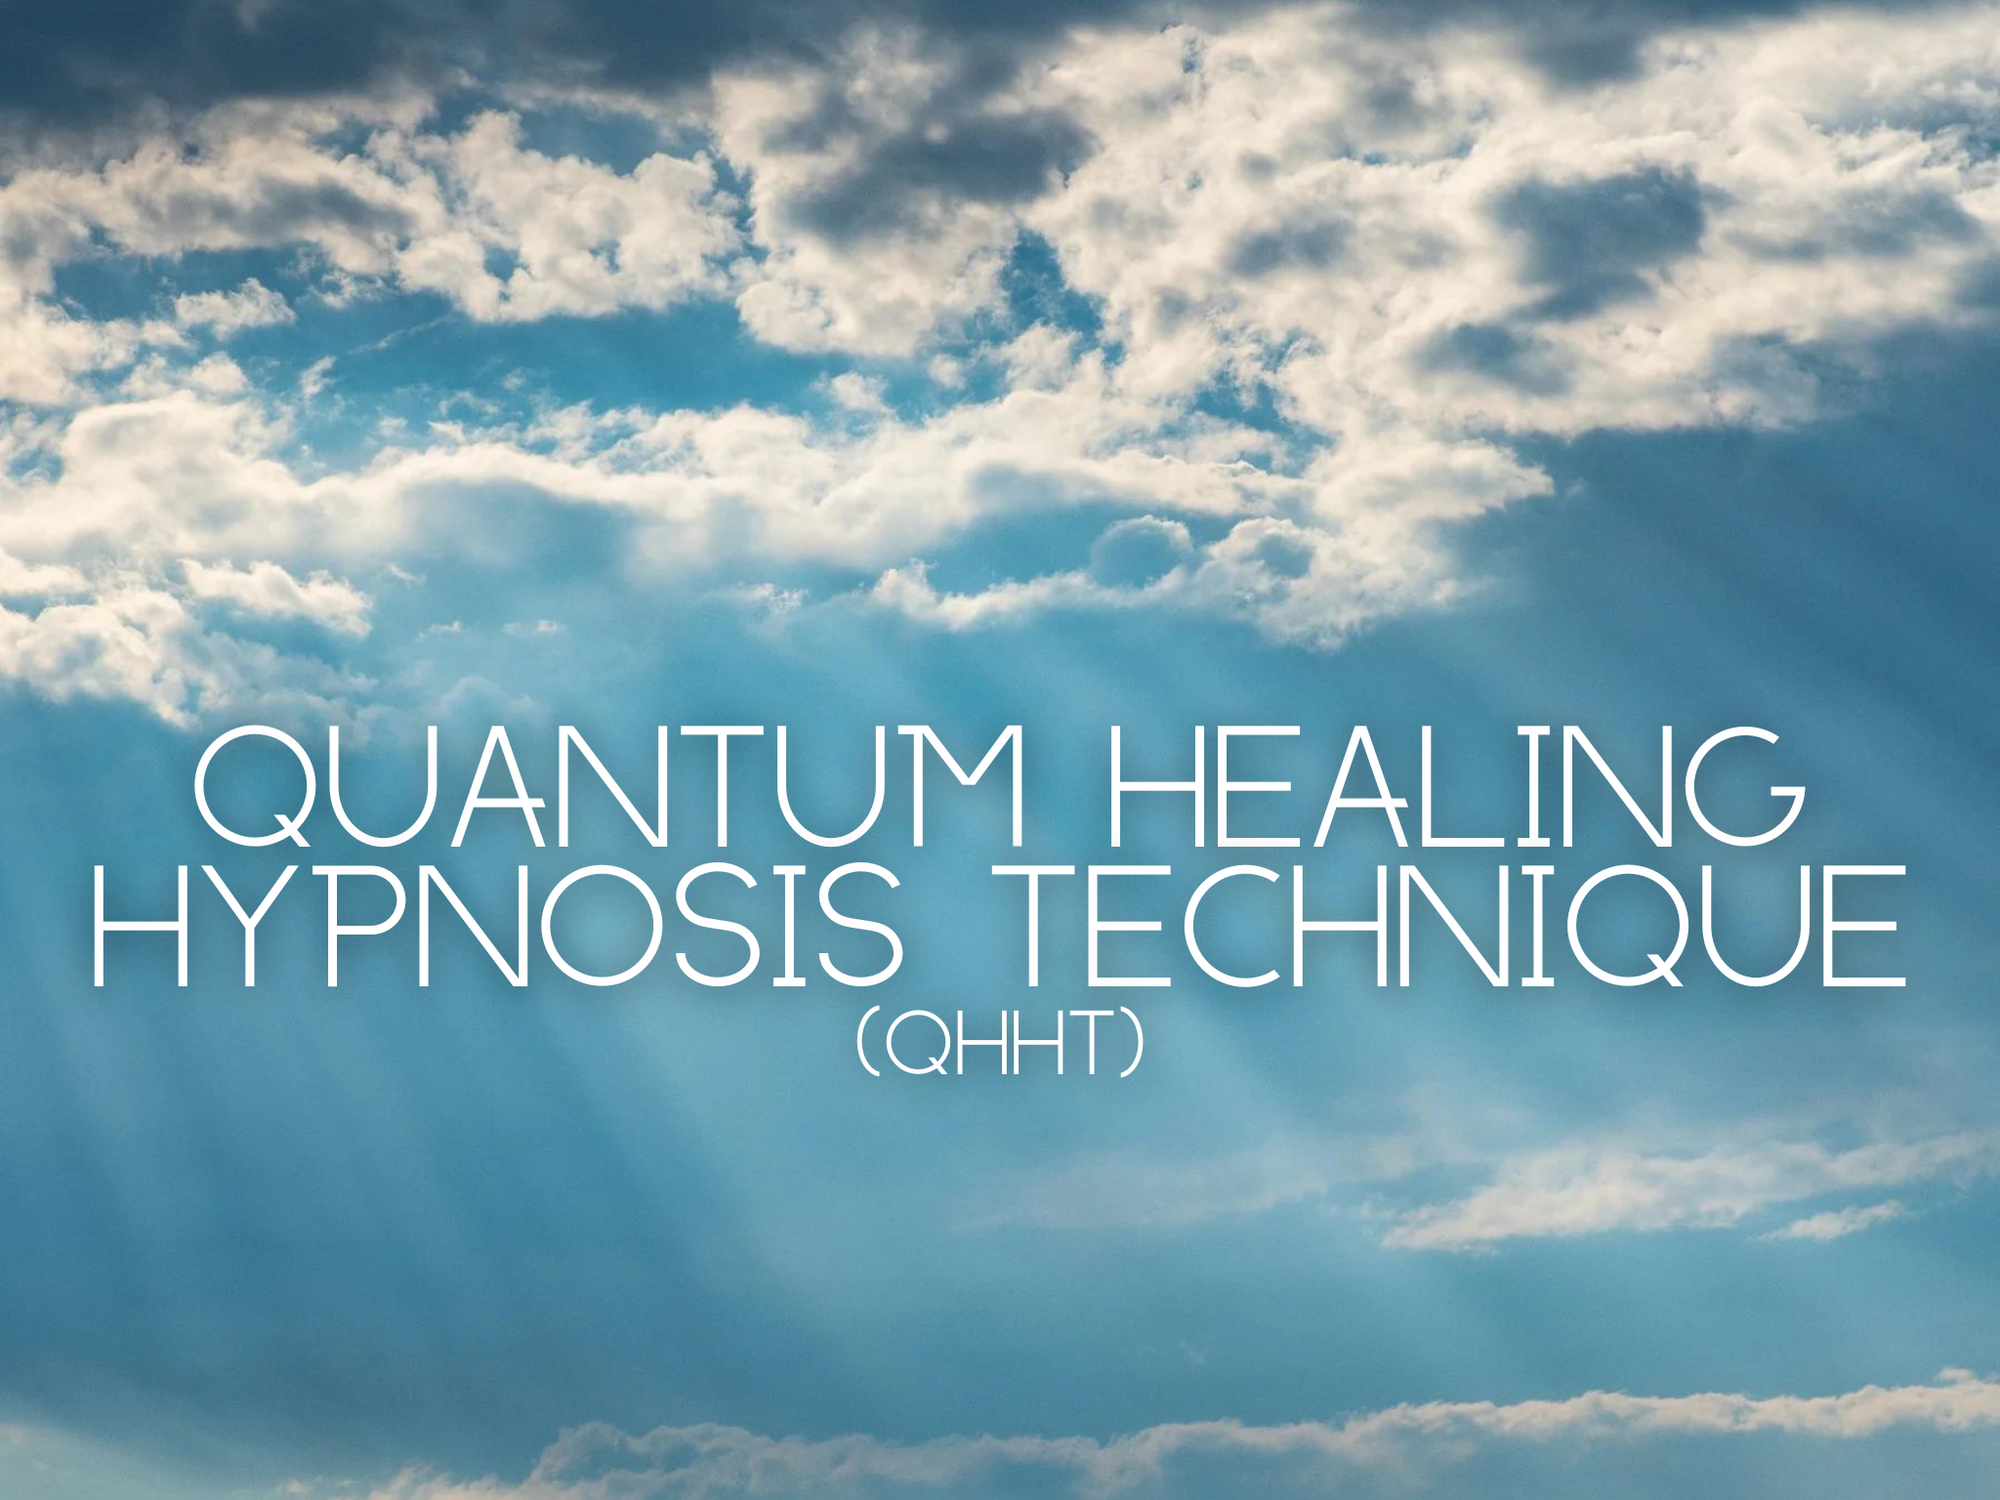 Quantum Healing Hypnosis Technique (QHHT) Session